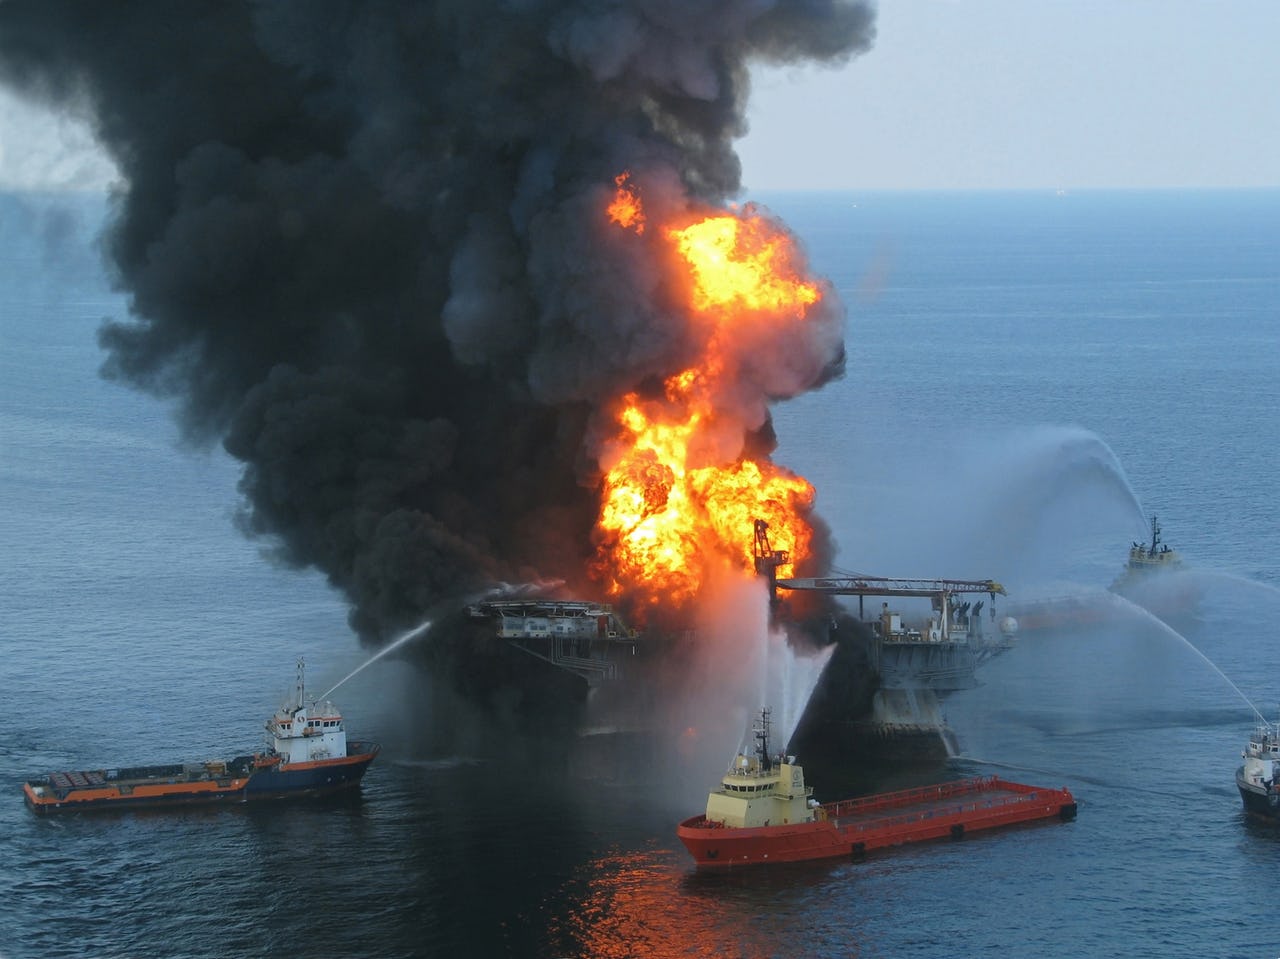 Fire on offshore drilling platform